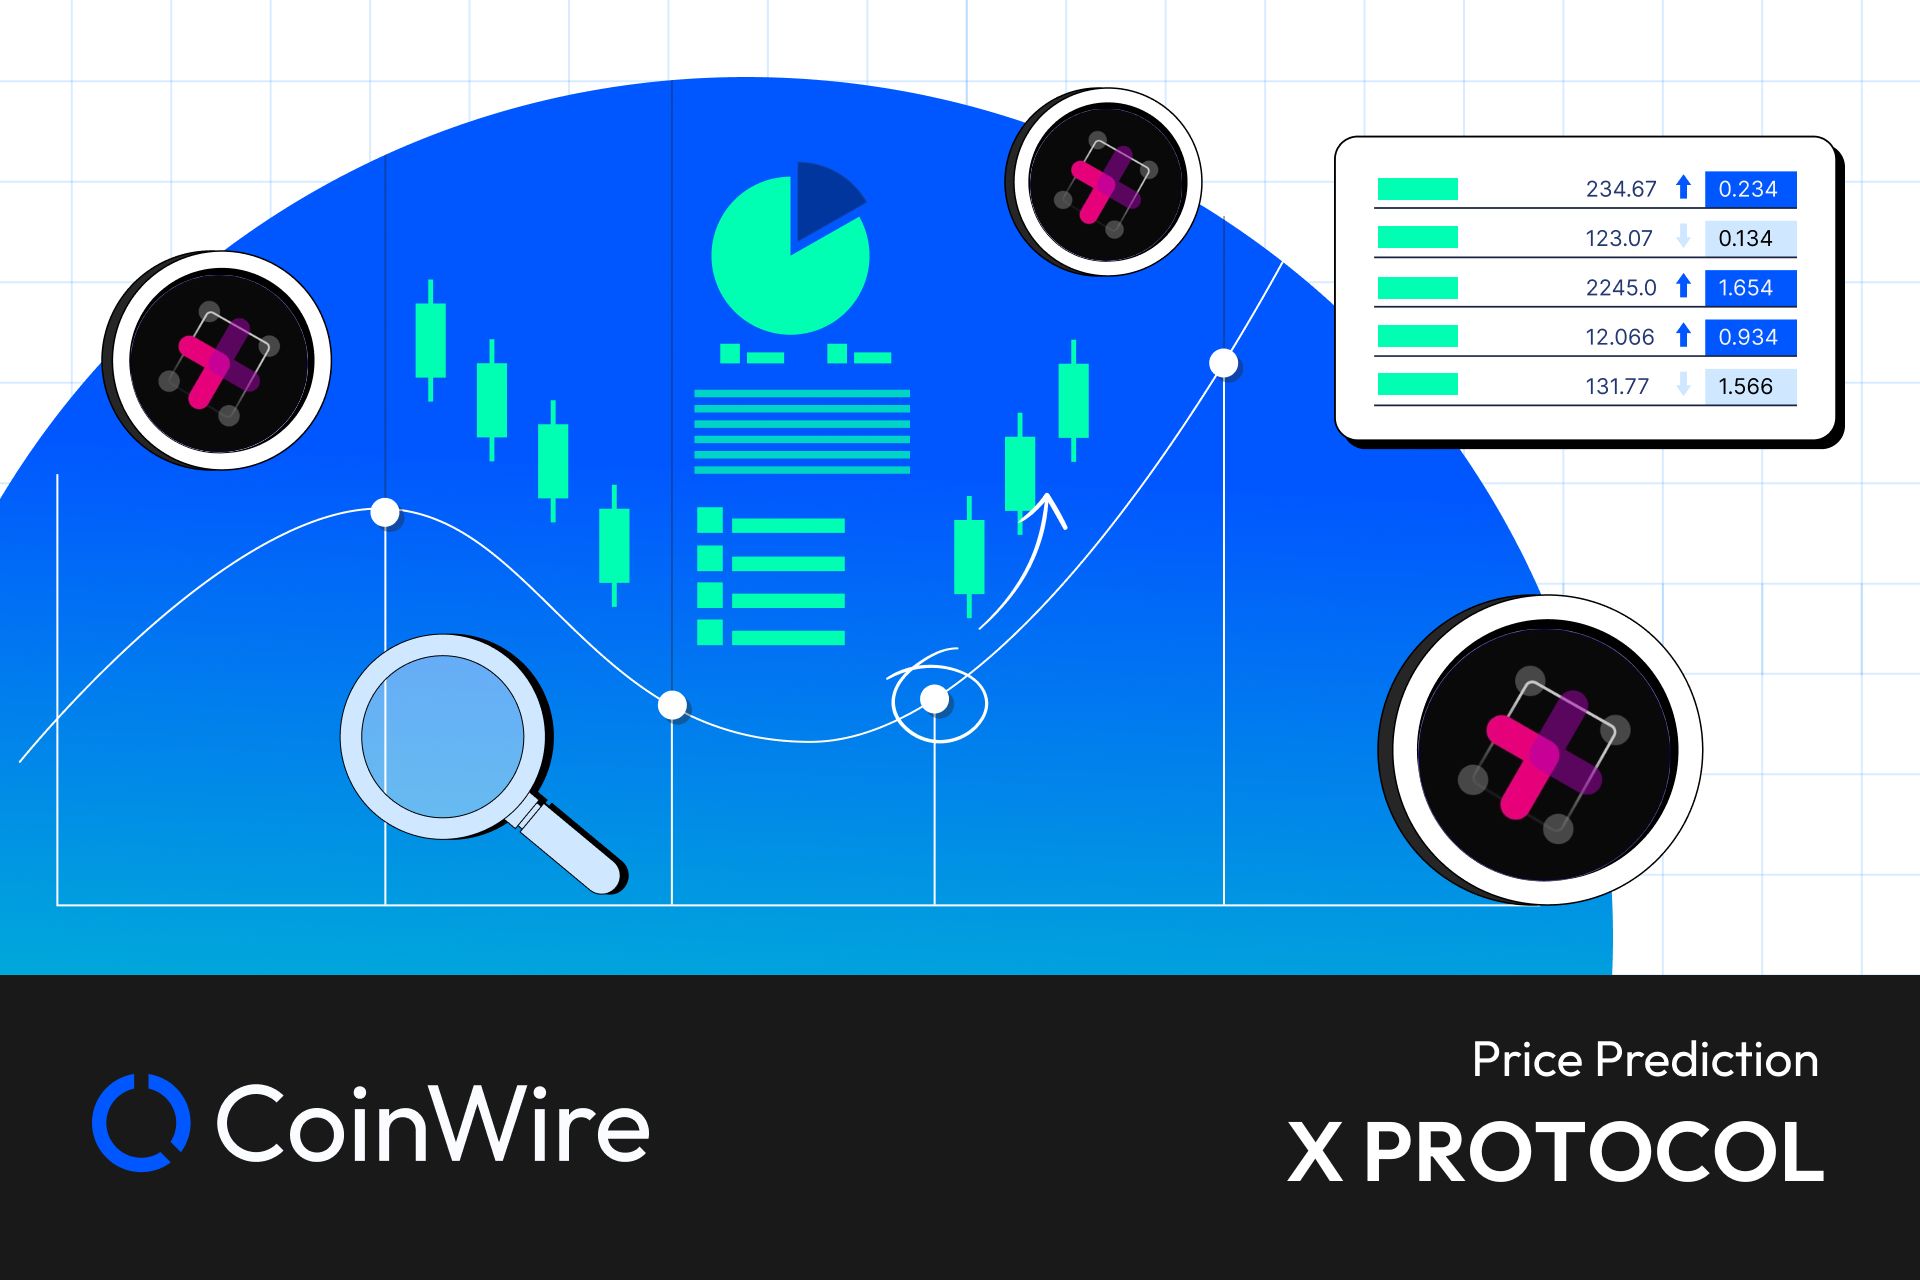 X Protocol Price Prediction